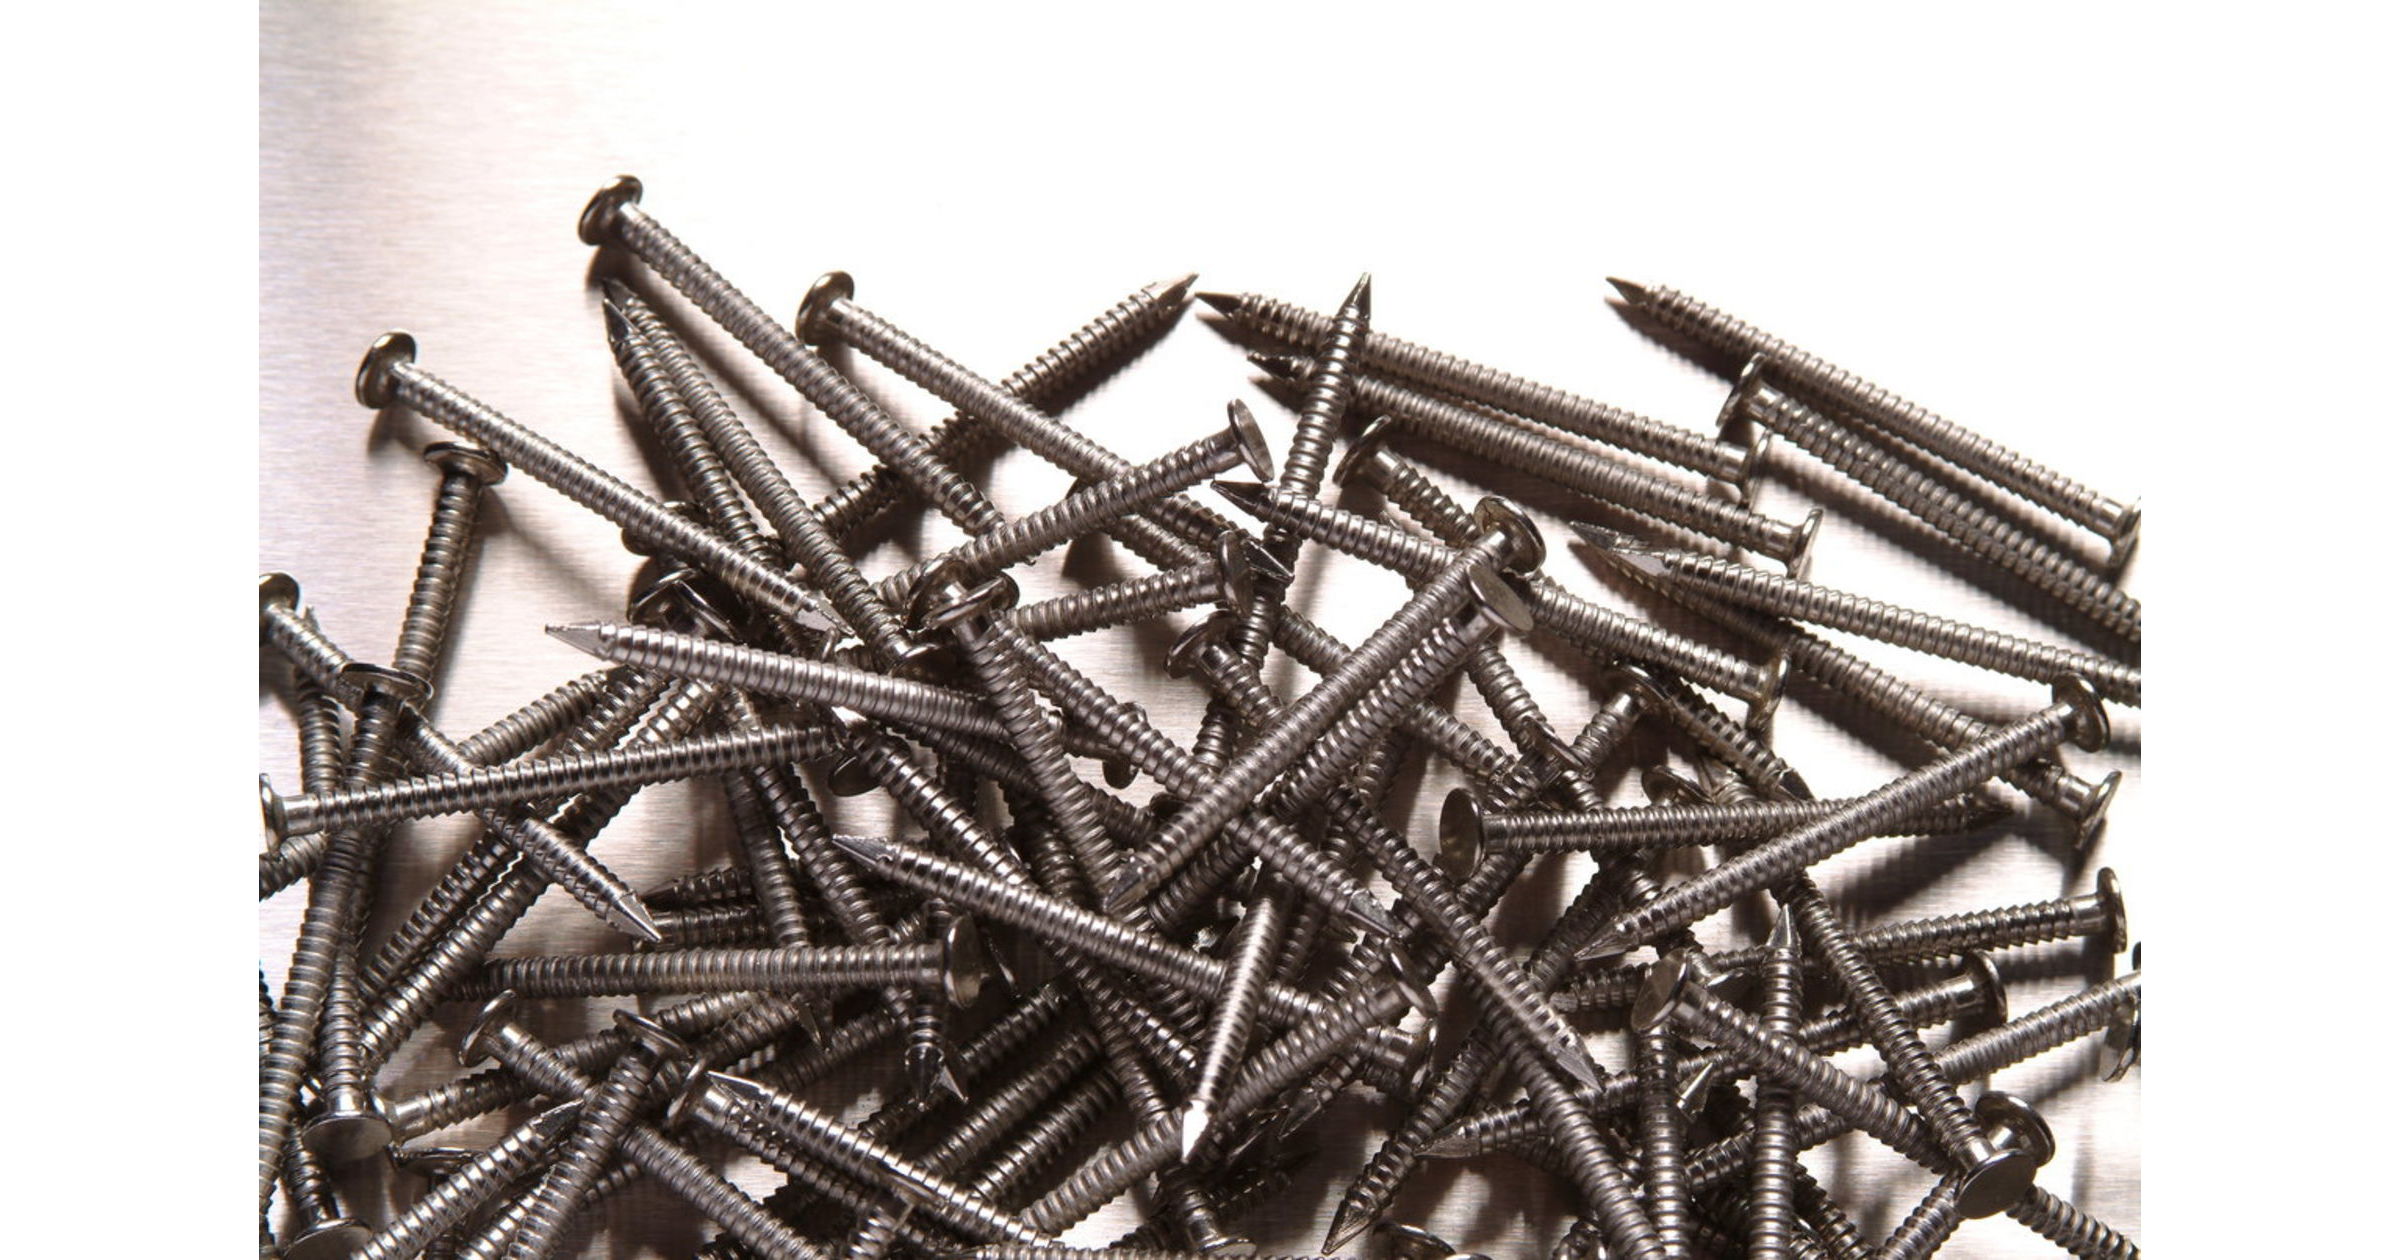 Stainless Steel Maintenance Free Plastic Headed Nails Nylon PA6 50MM Length